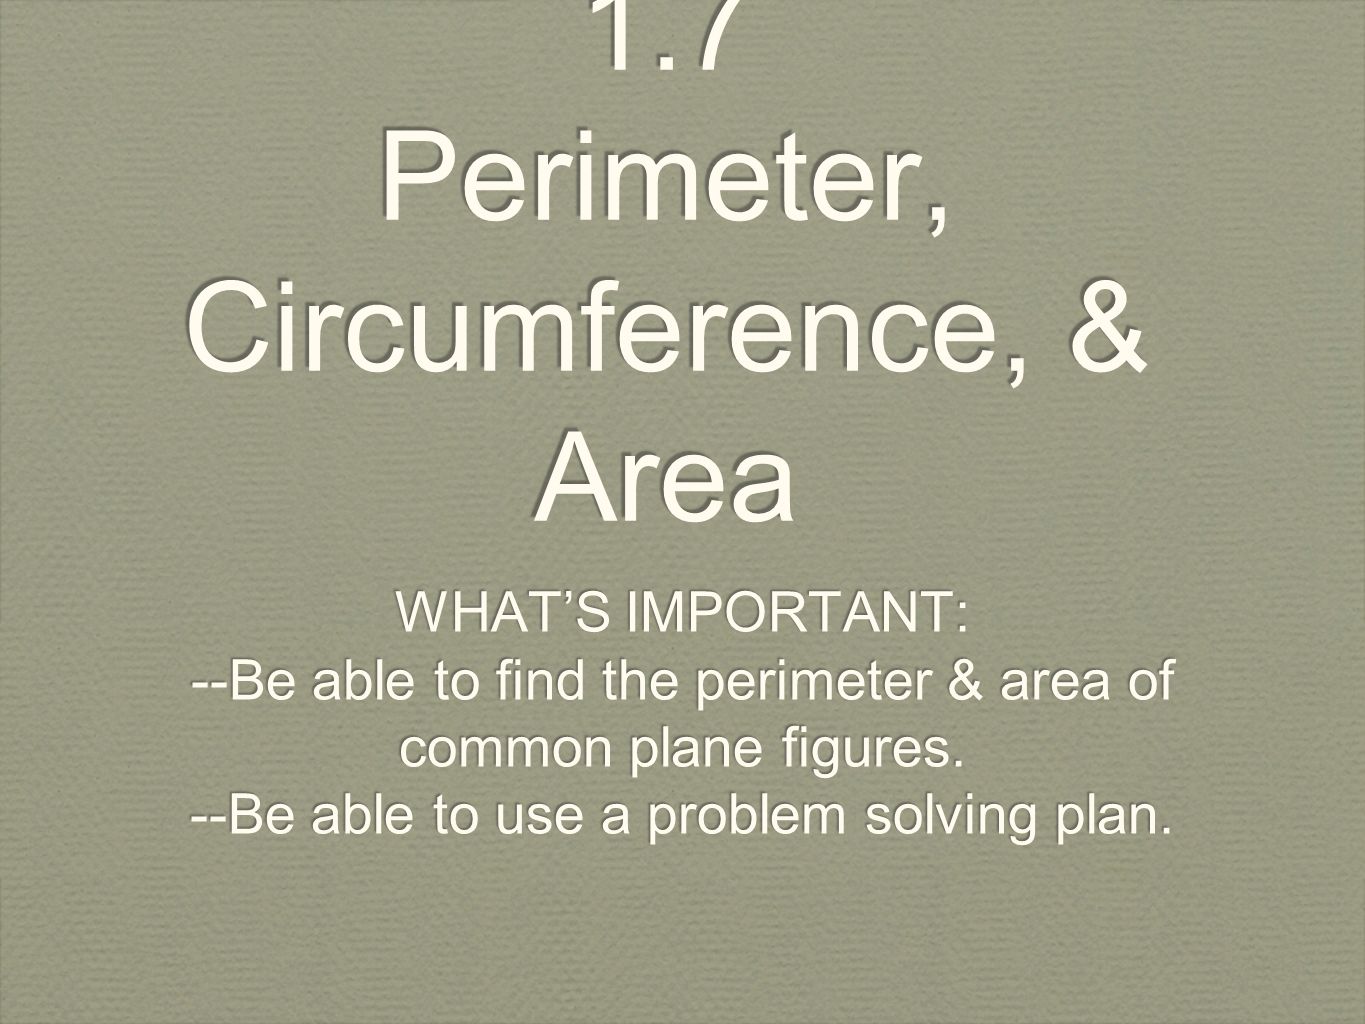 1.7 Perimeter, Circumference, & Area